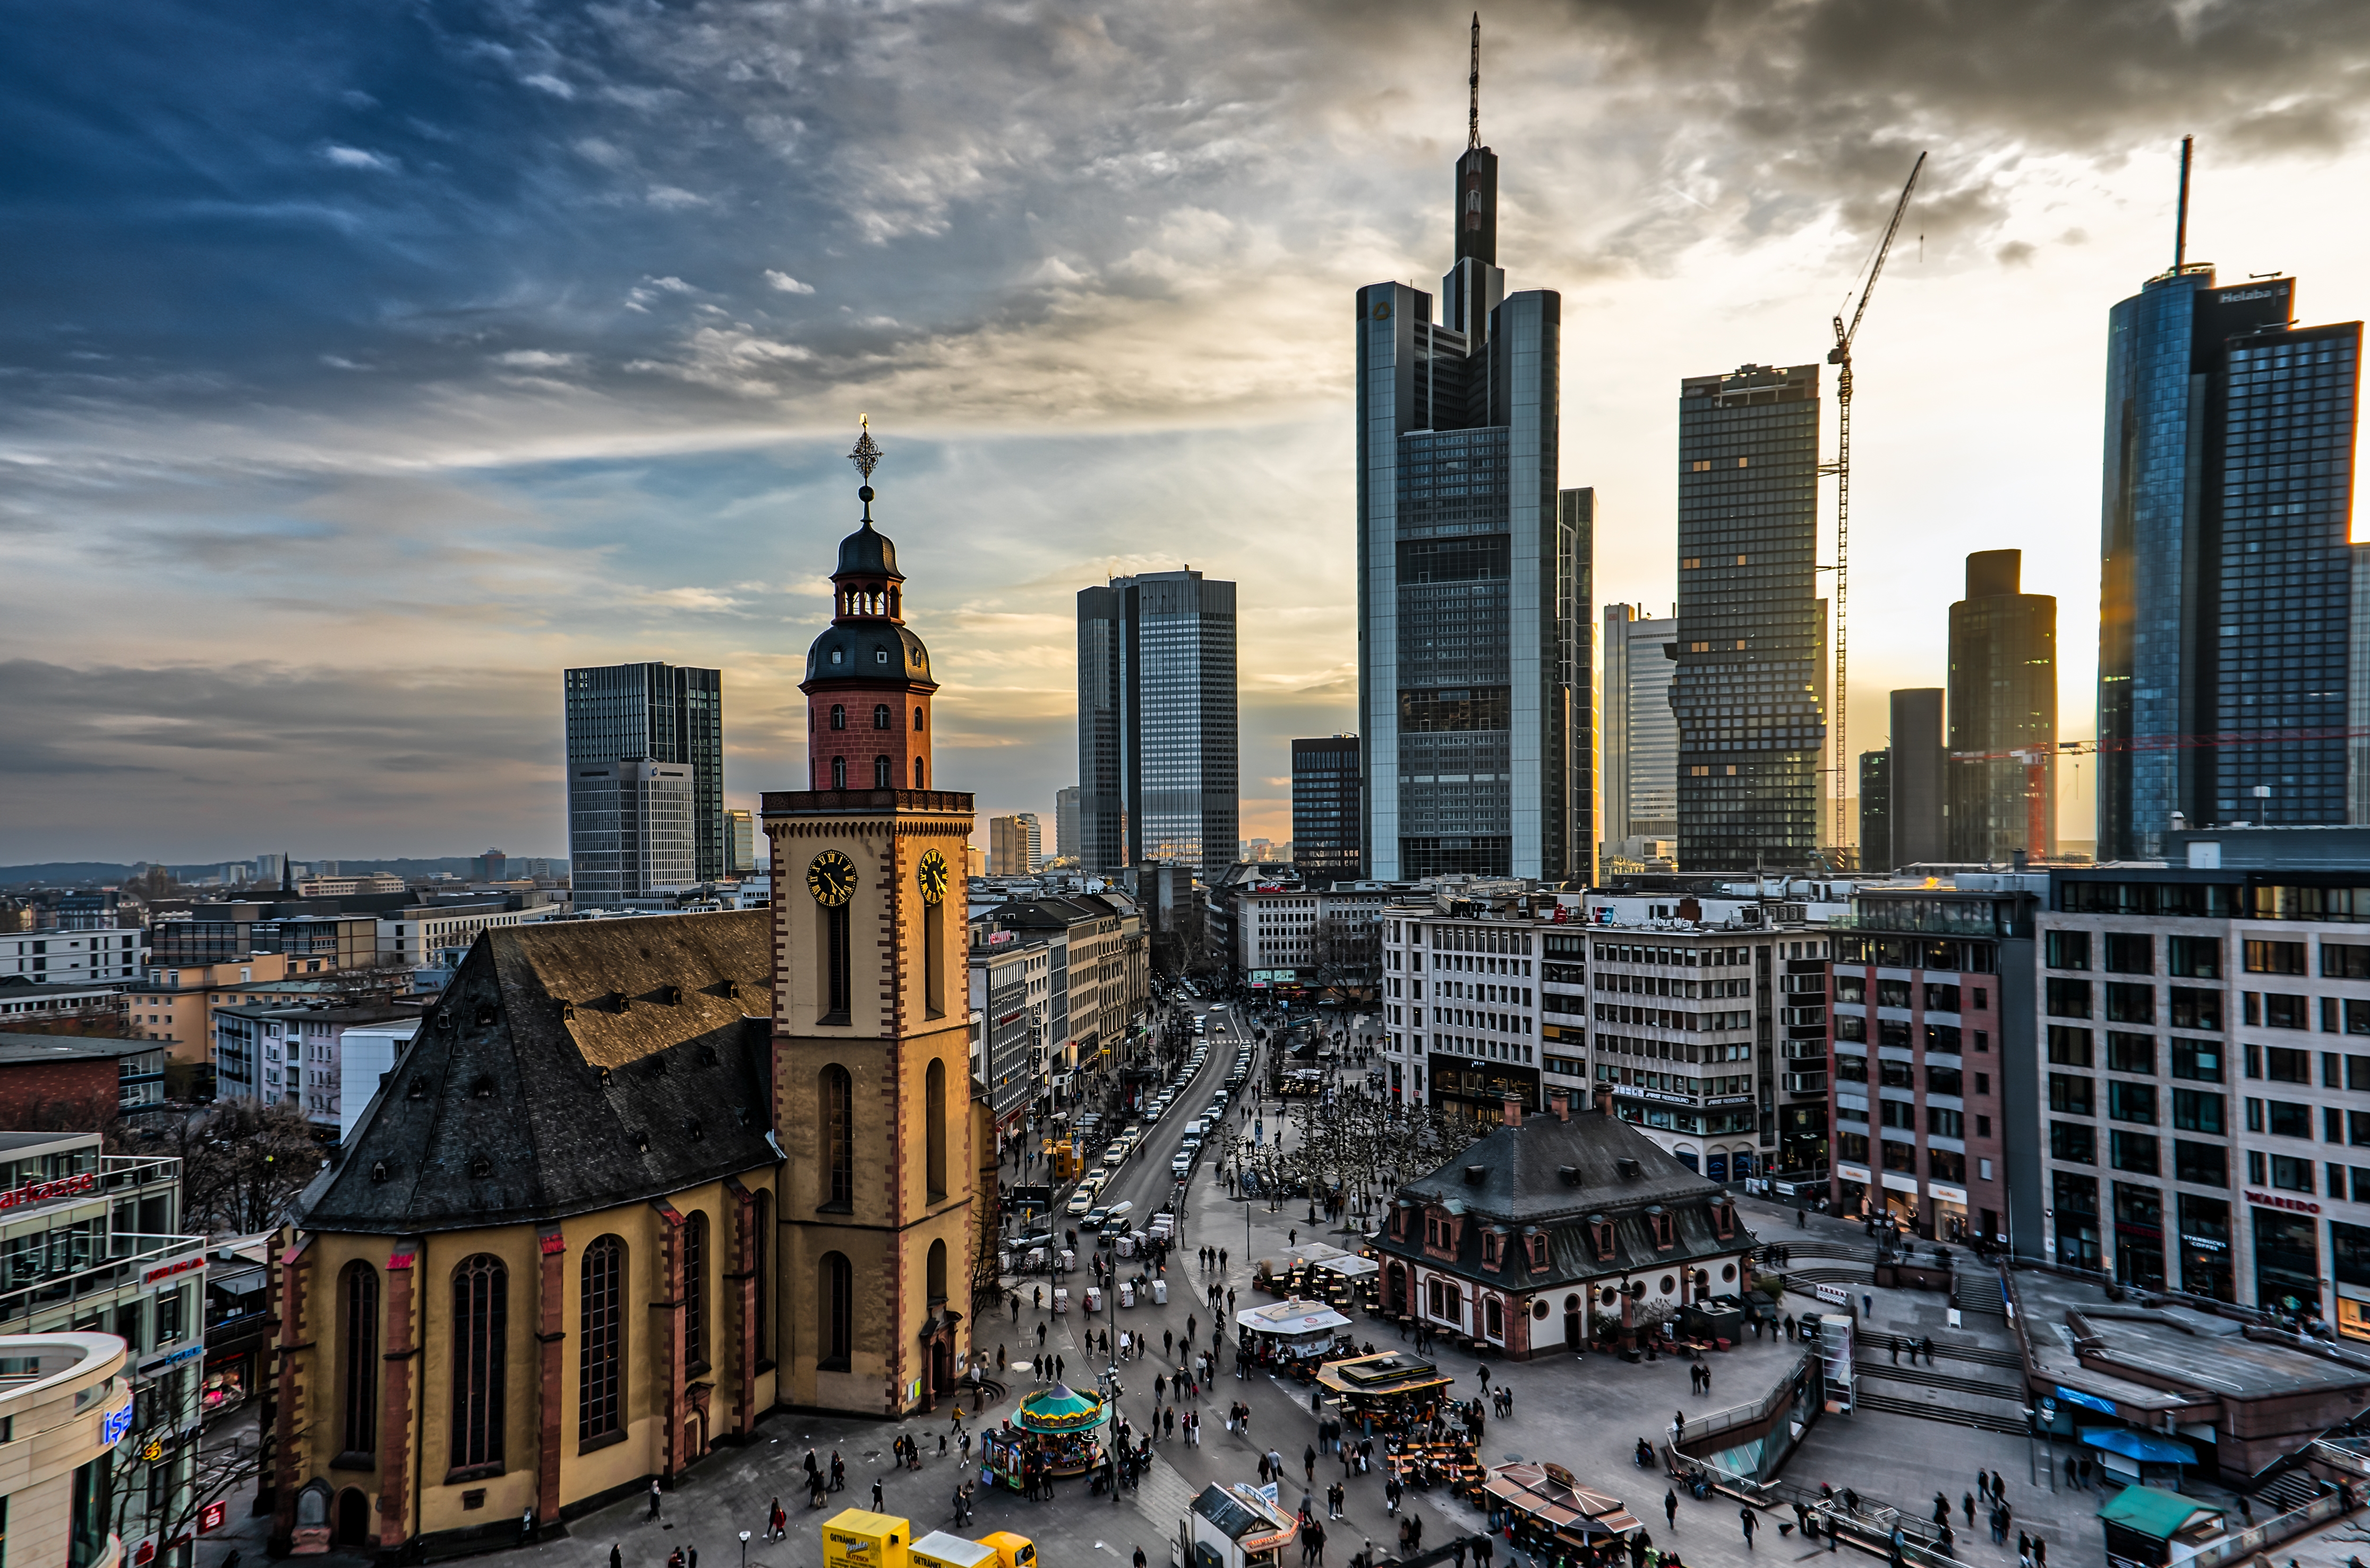 Центр города на немецком. Город Frankfurt am main. Мессетурм Франкфурт-на-Майне. Франкфурт небоскребы. Архитектура Франкфурта на Майне.